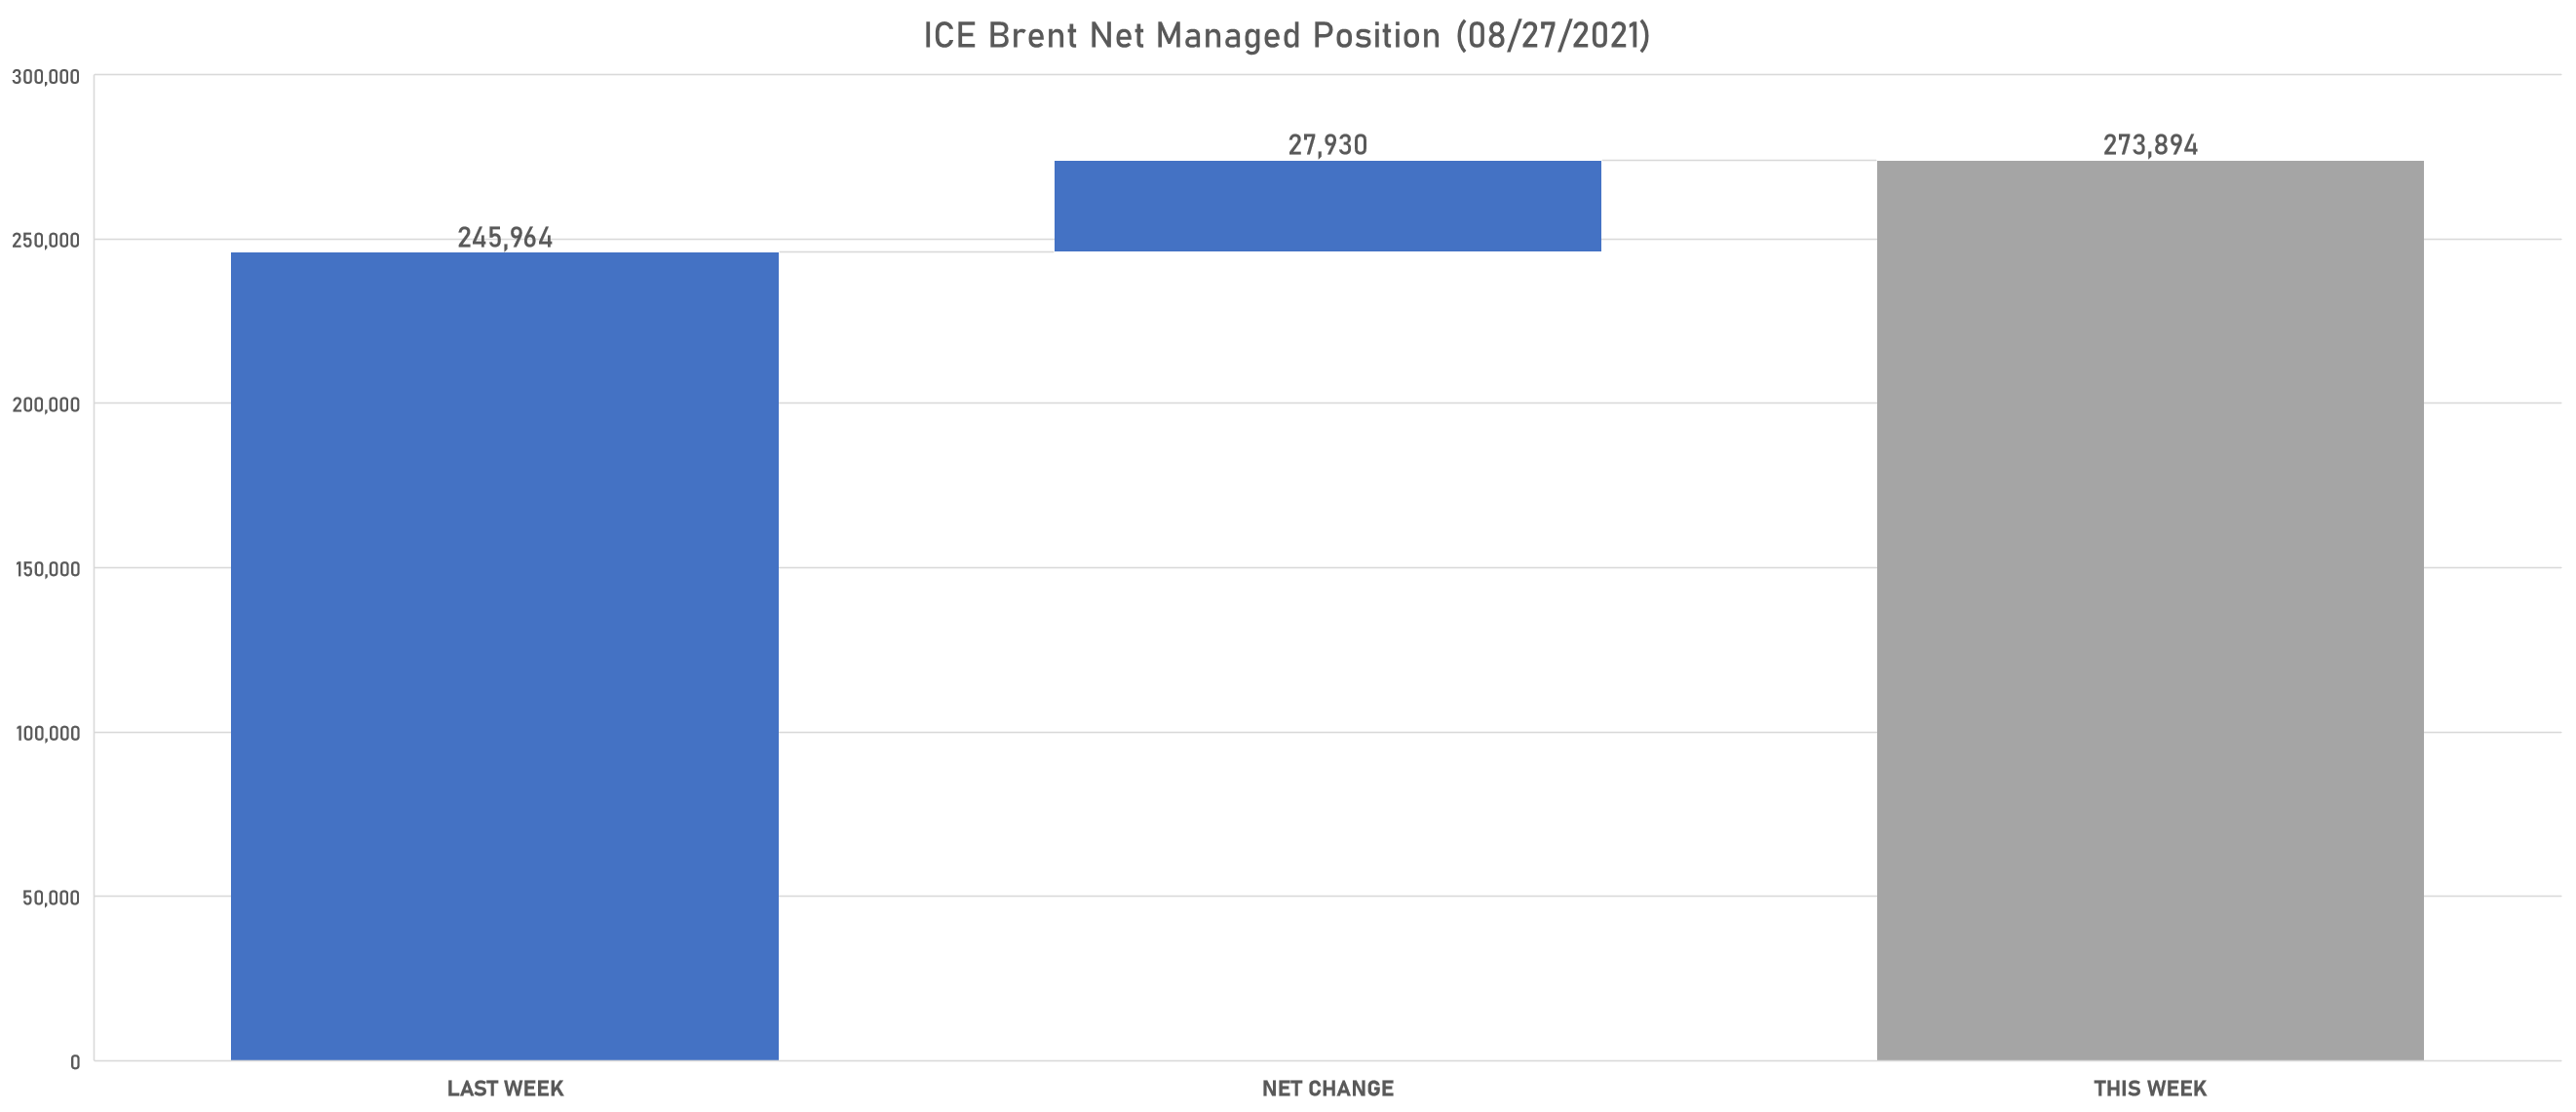 ICE Brent Managed Money Net Position | Sources: phipost.com, Refinitiv data